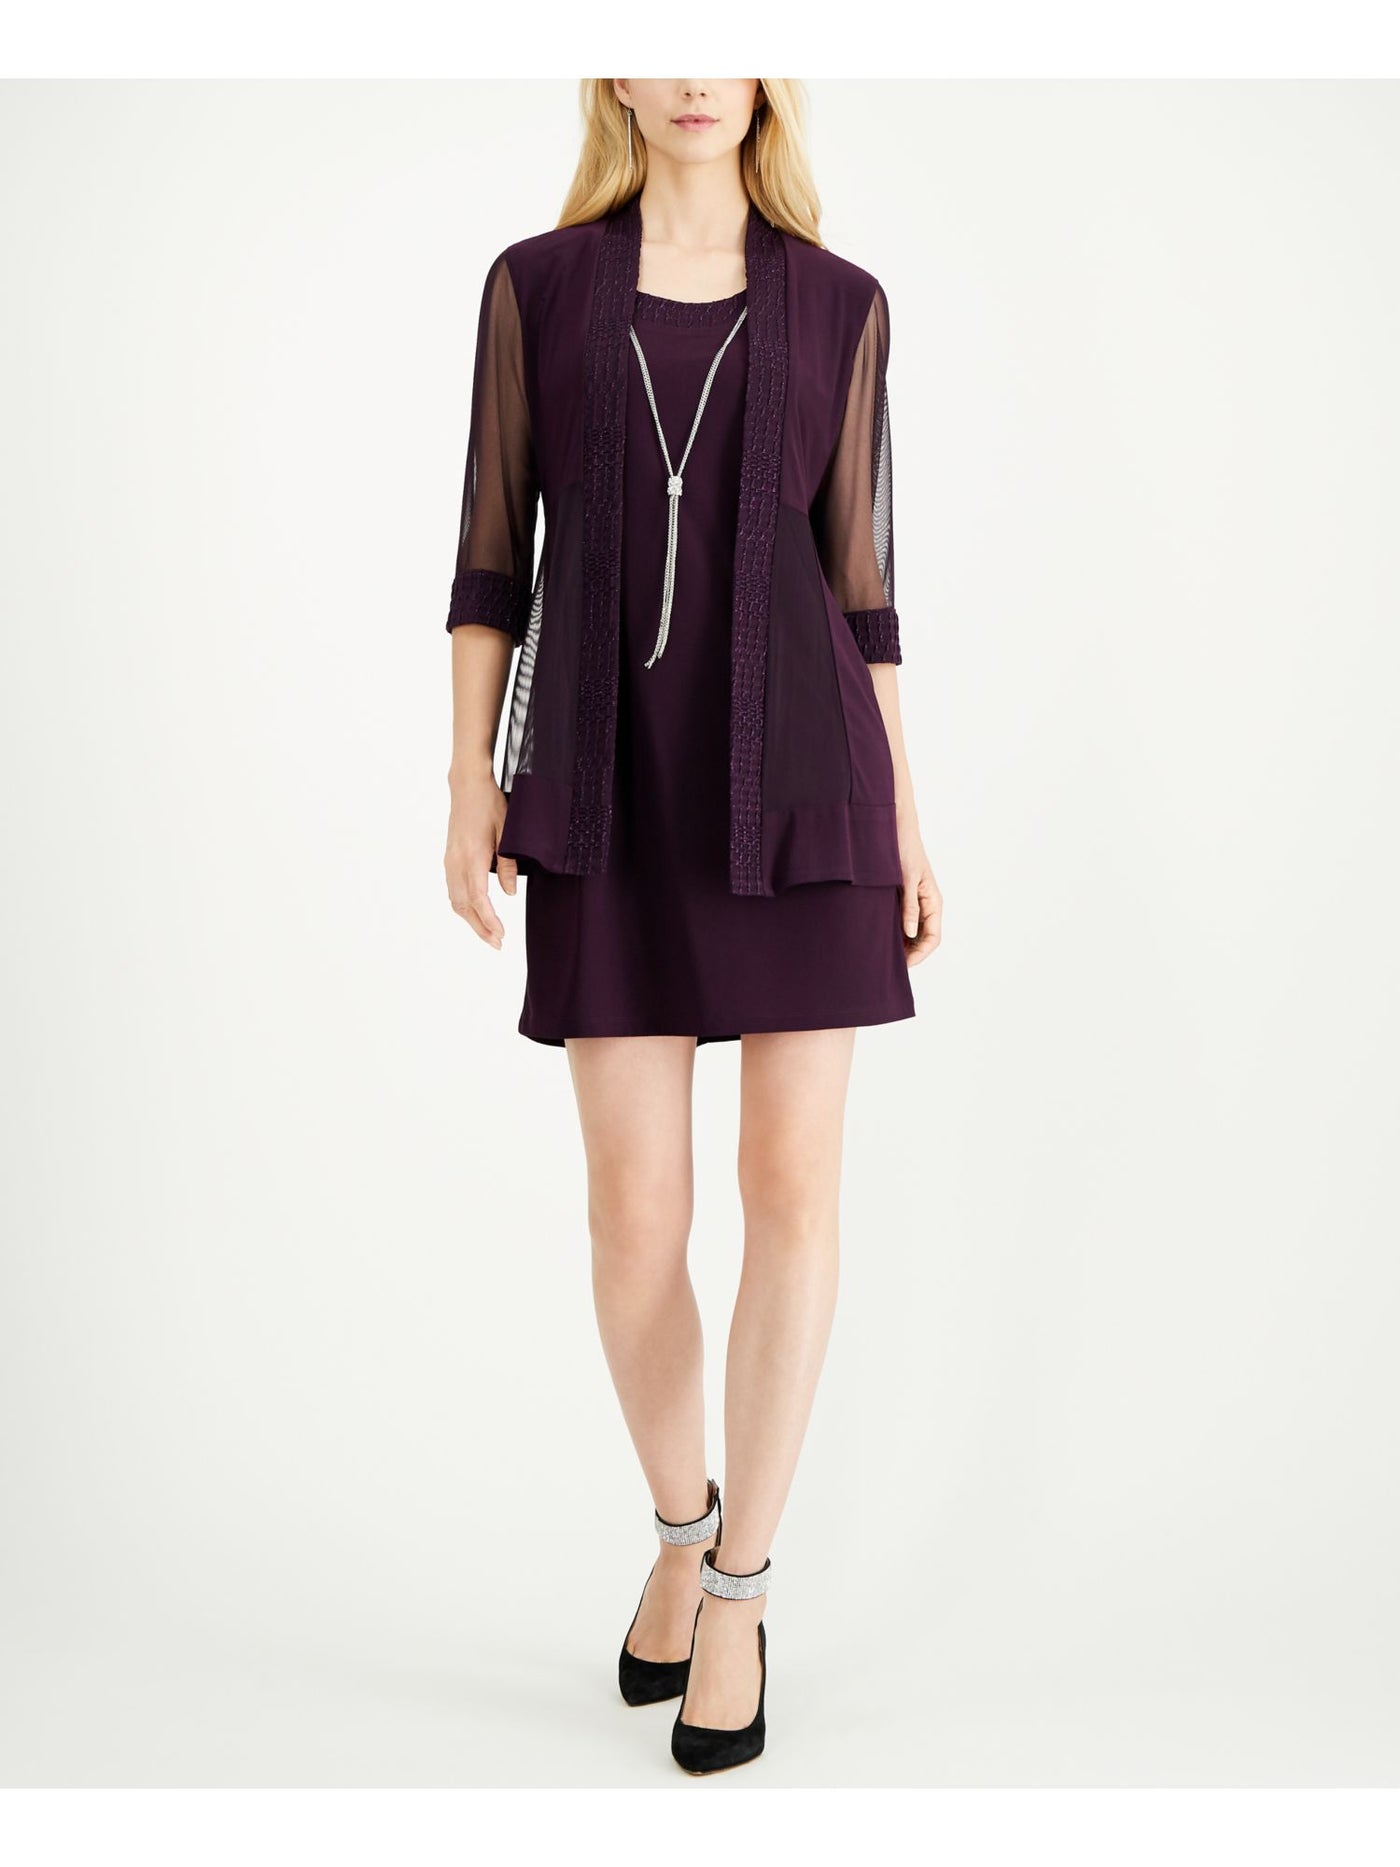 R&M RICHARDS Womens Purple Stretch Sheer Textured Glitter 3/4 Sleeve Open Front Evening Blazer Jacket Petites 12P